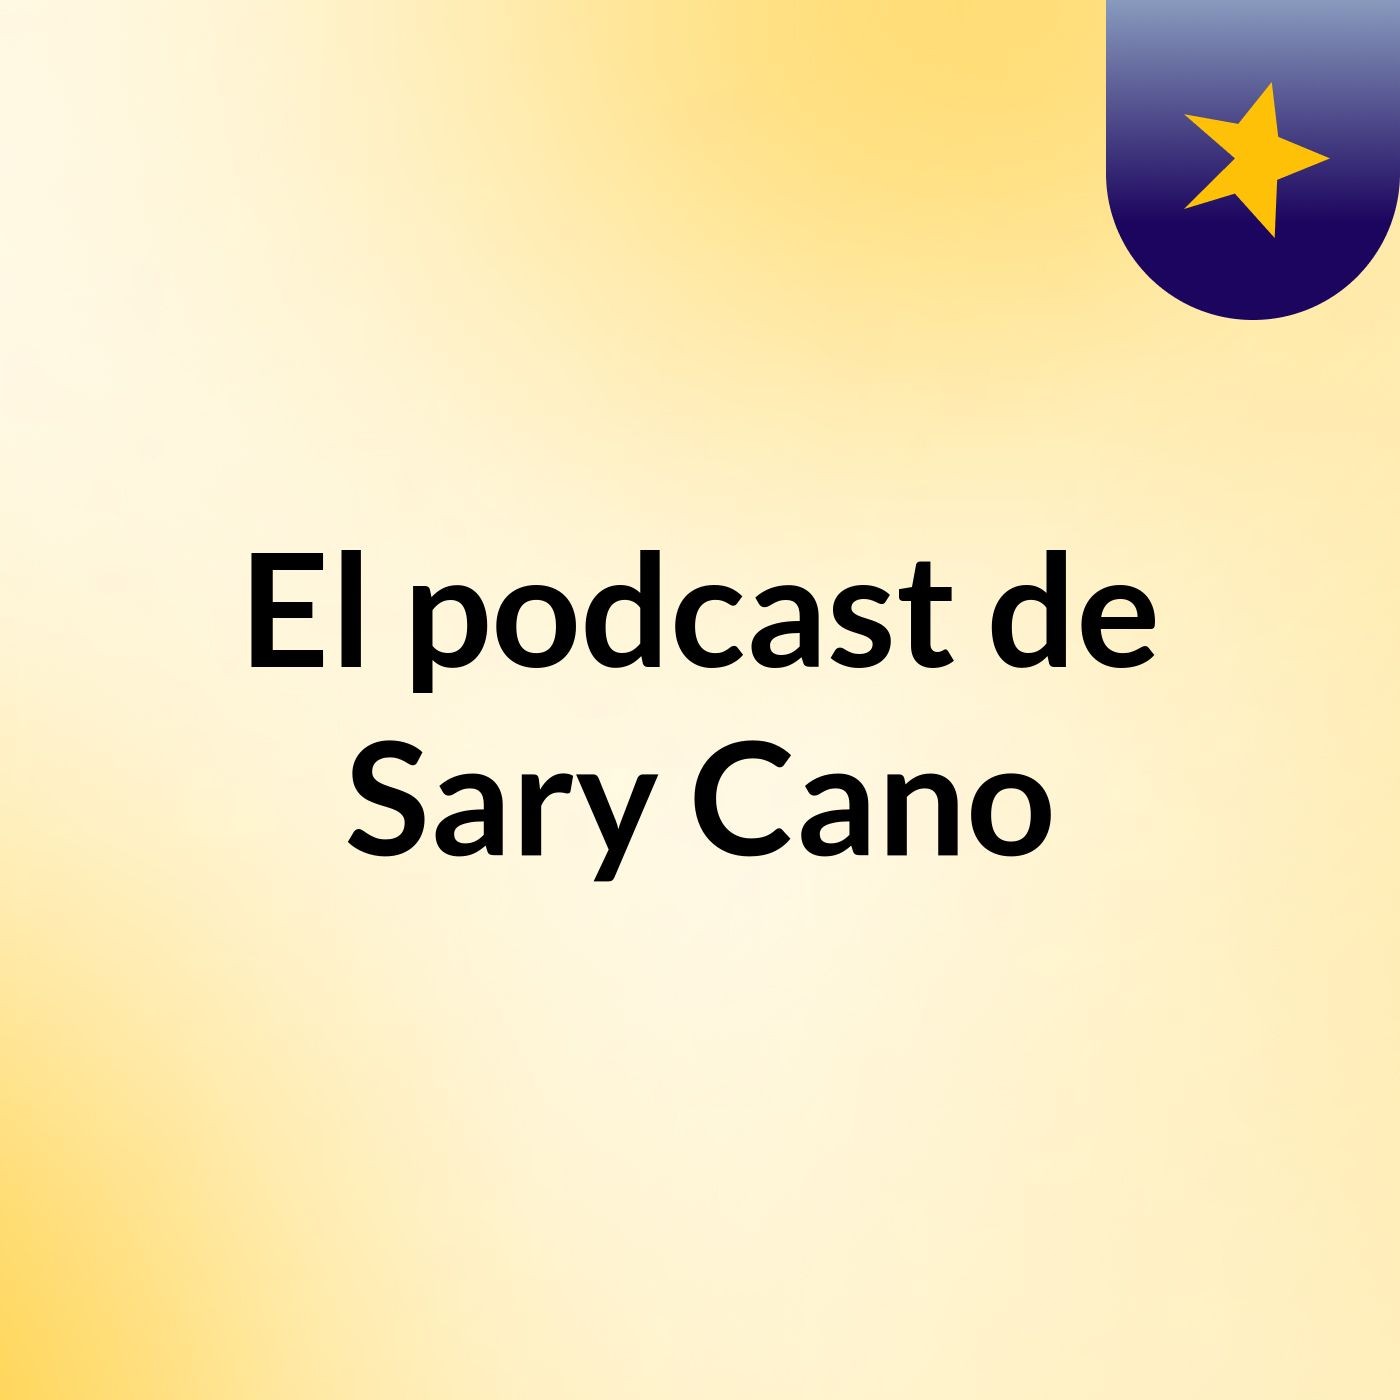 El podcast de Sary Cano